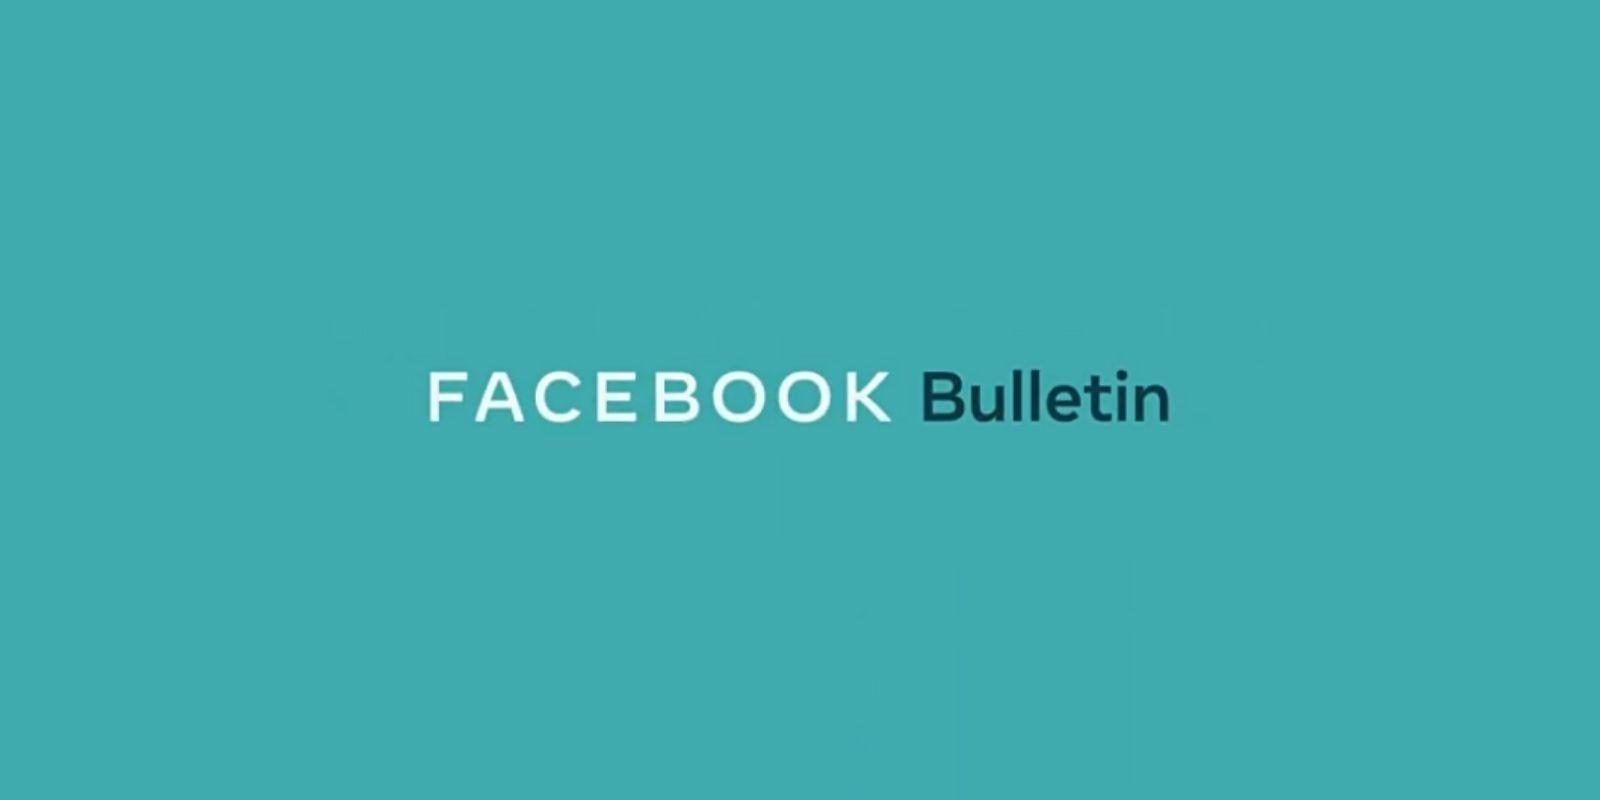 Facebook Launches newsletter platform "Bulletin"_30.1